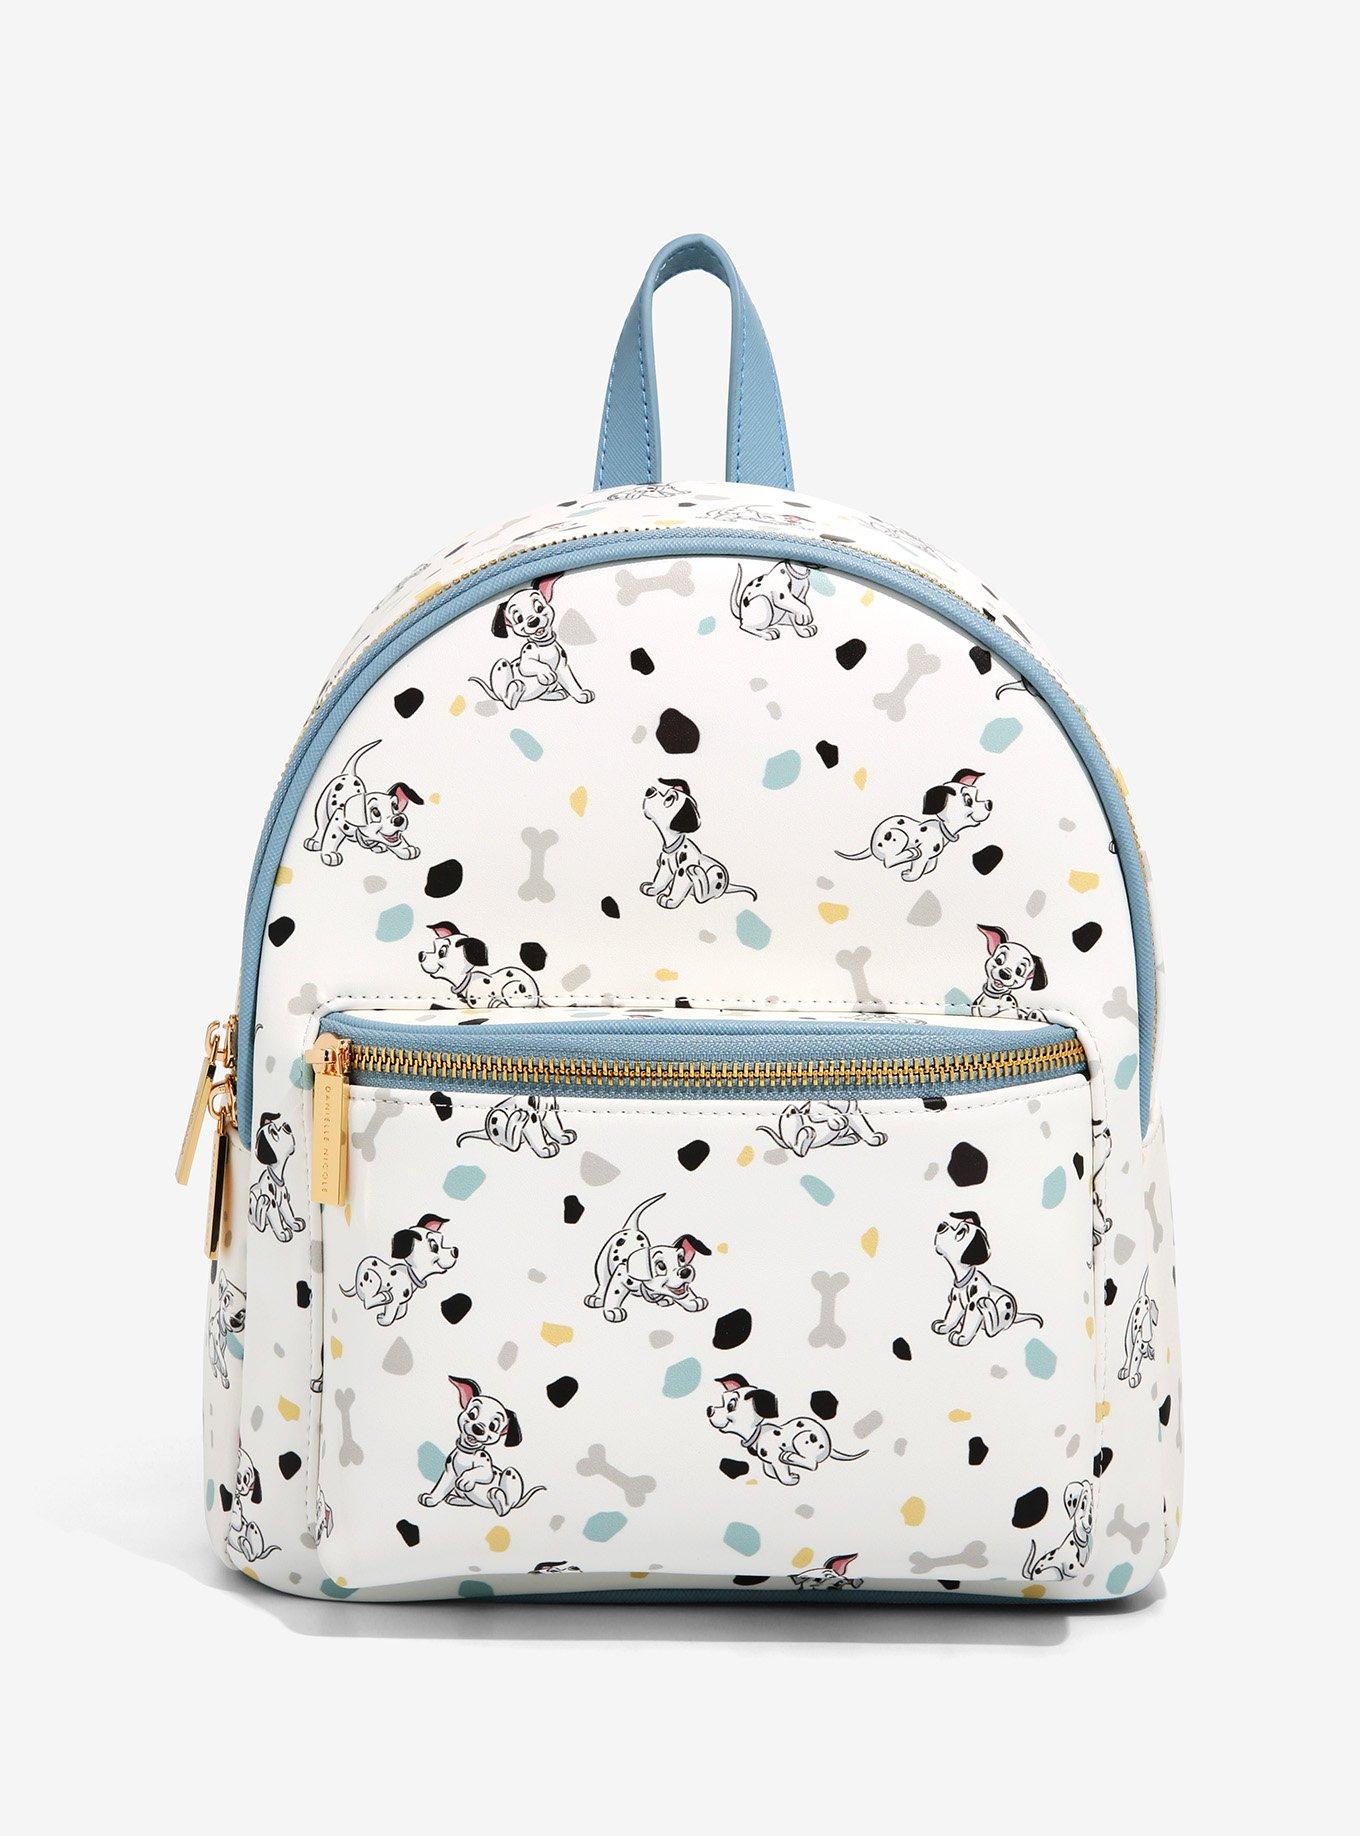 Disney 101 Dalmatians Mini Backpack Peekaboo Paws Pattern Bag Danielle Nicole